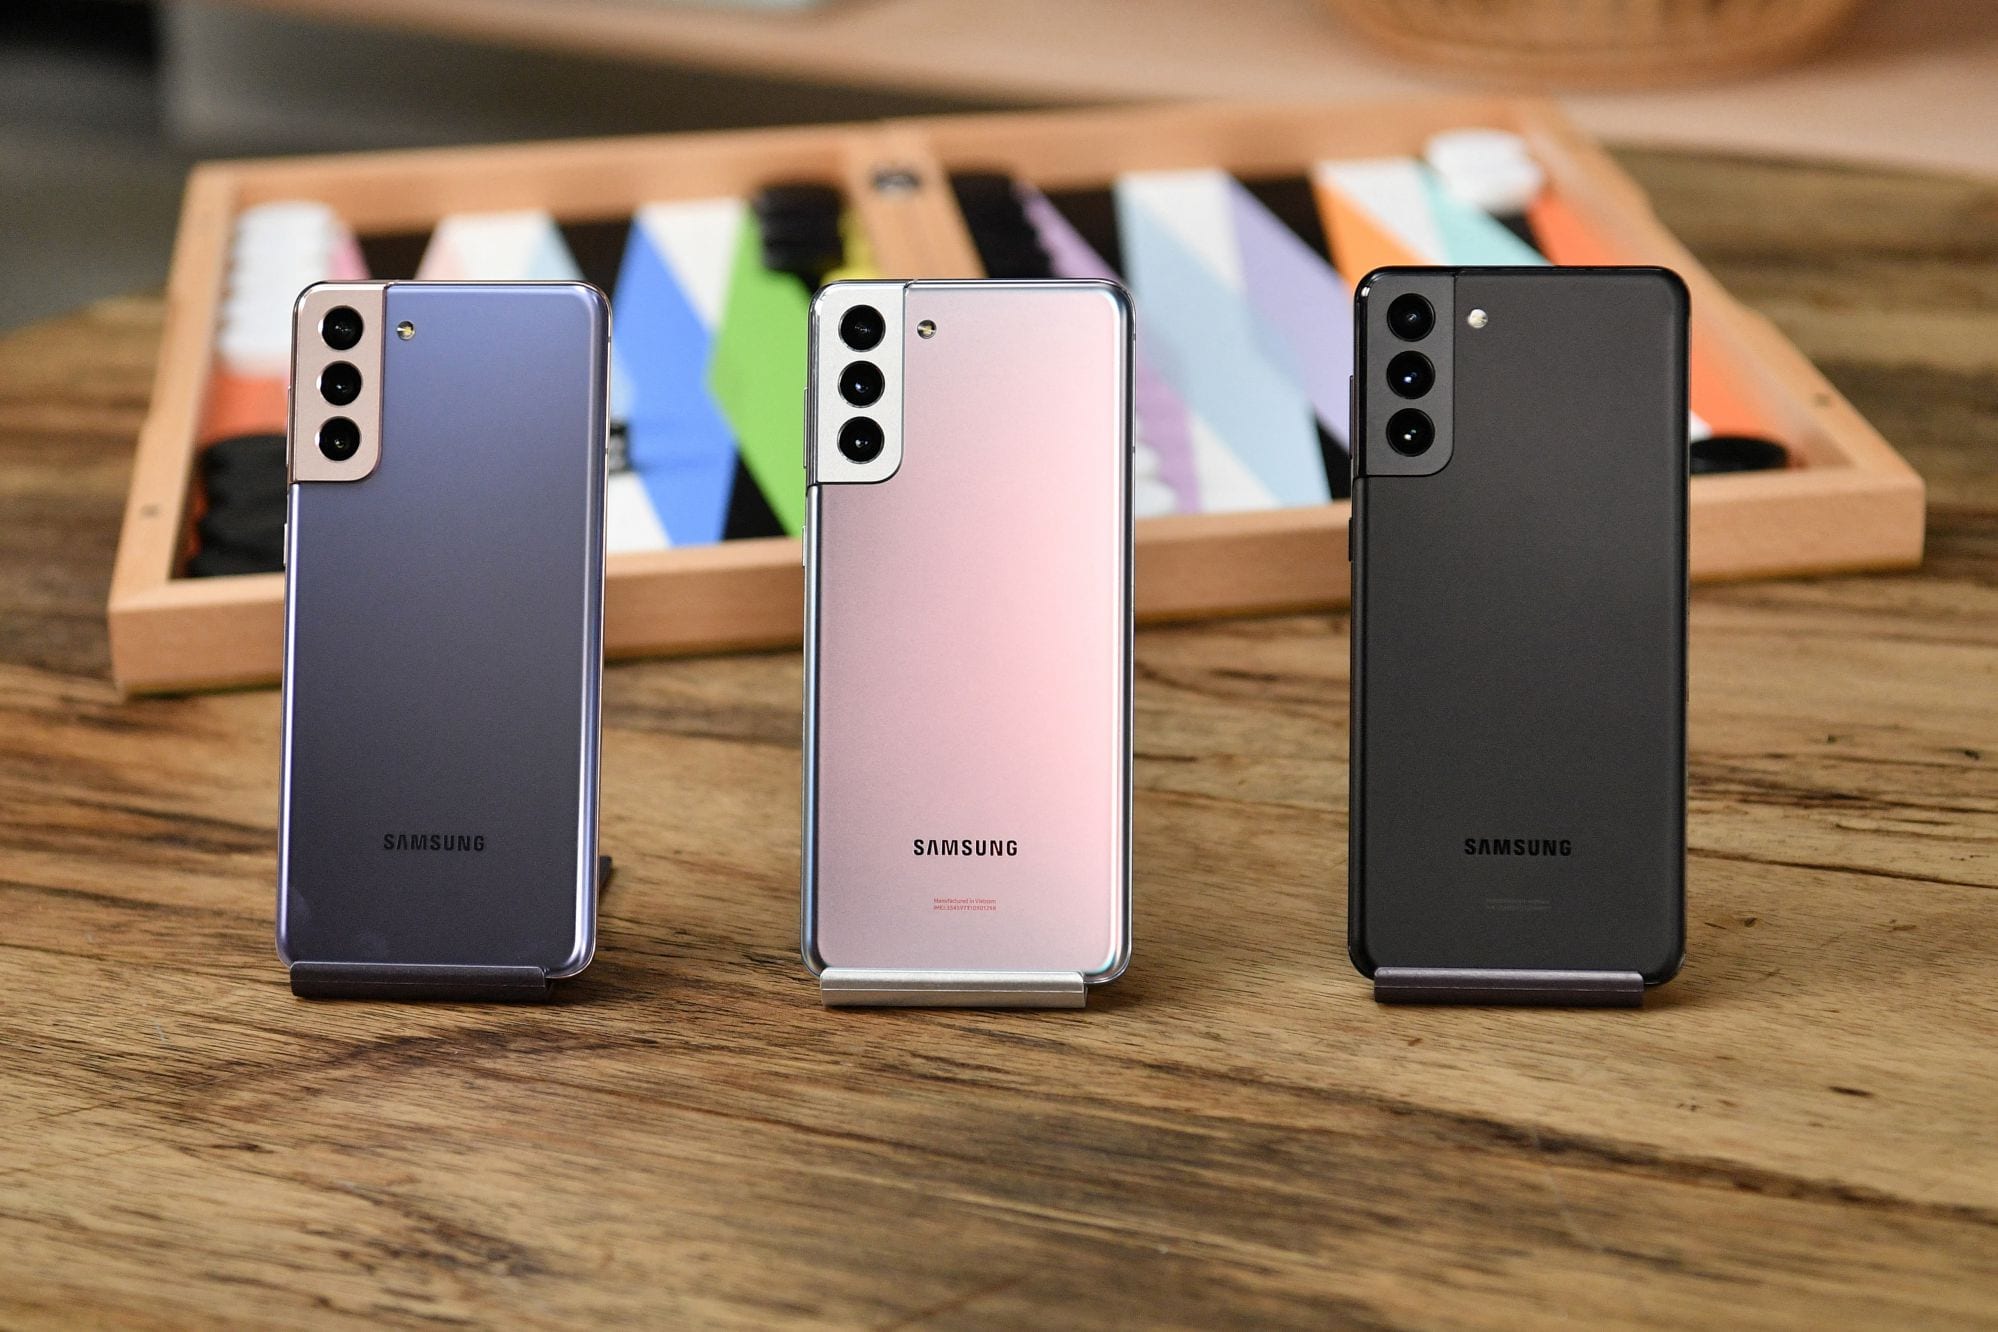 Samsung Galaxy S21: Soft & Hard Reset